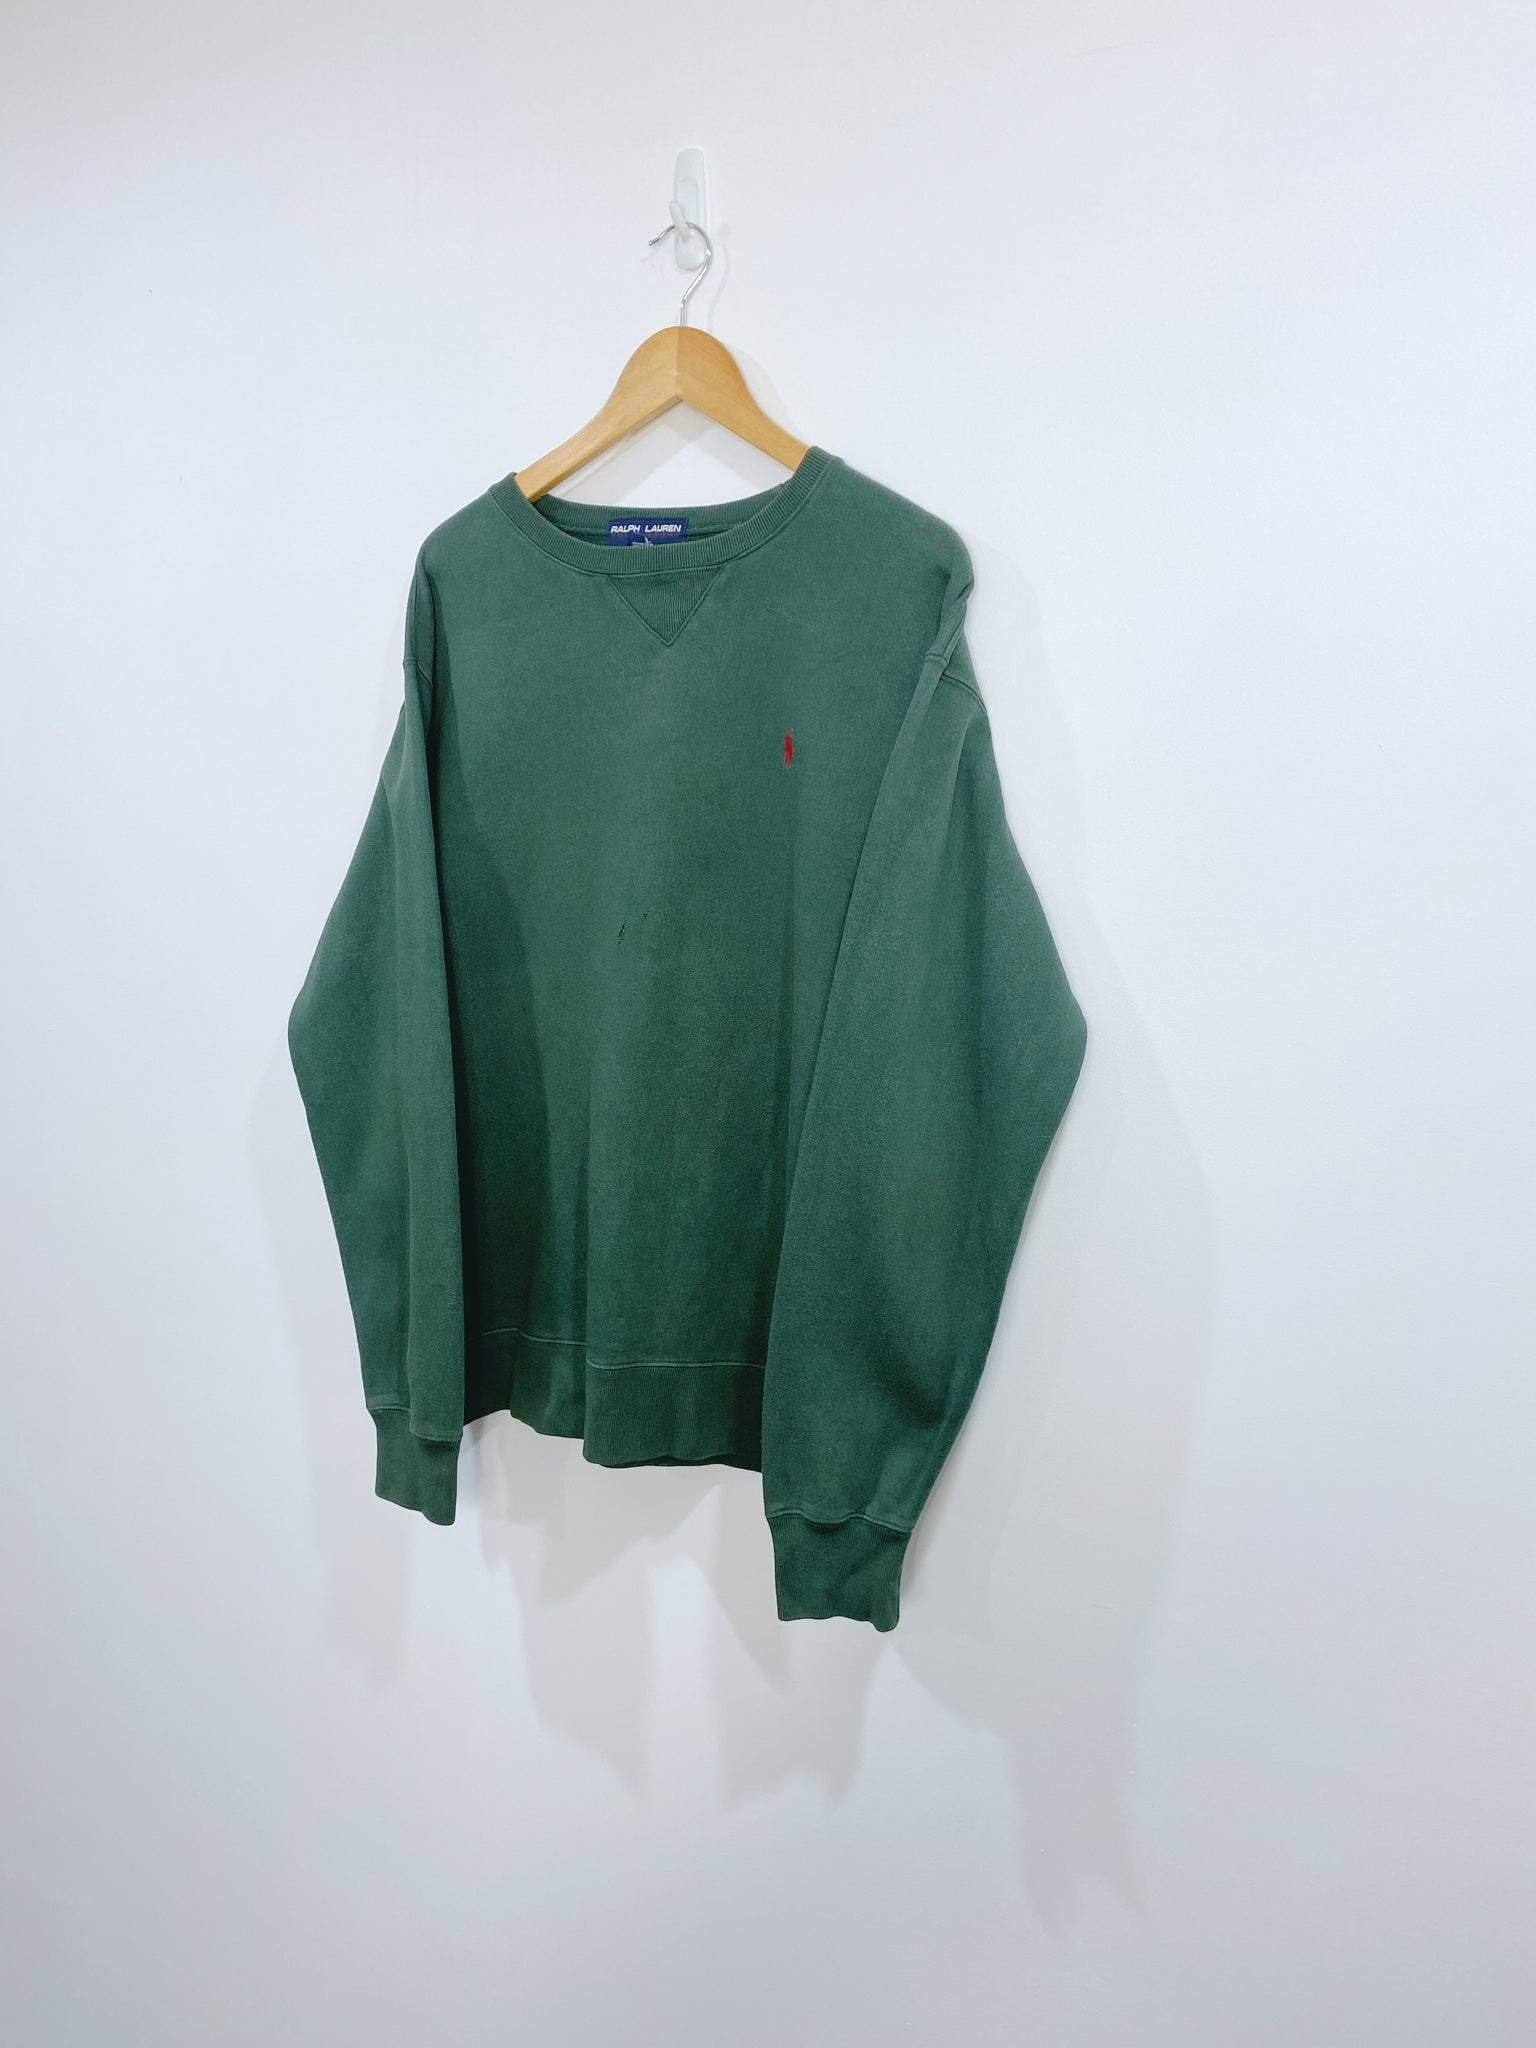 Vintage Ralph Lauren Embroidered Sweatshirt L